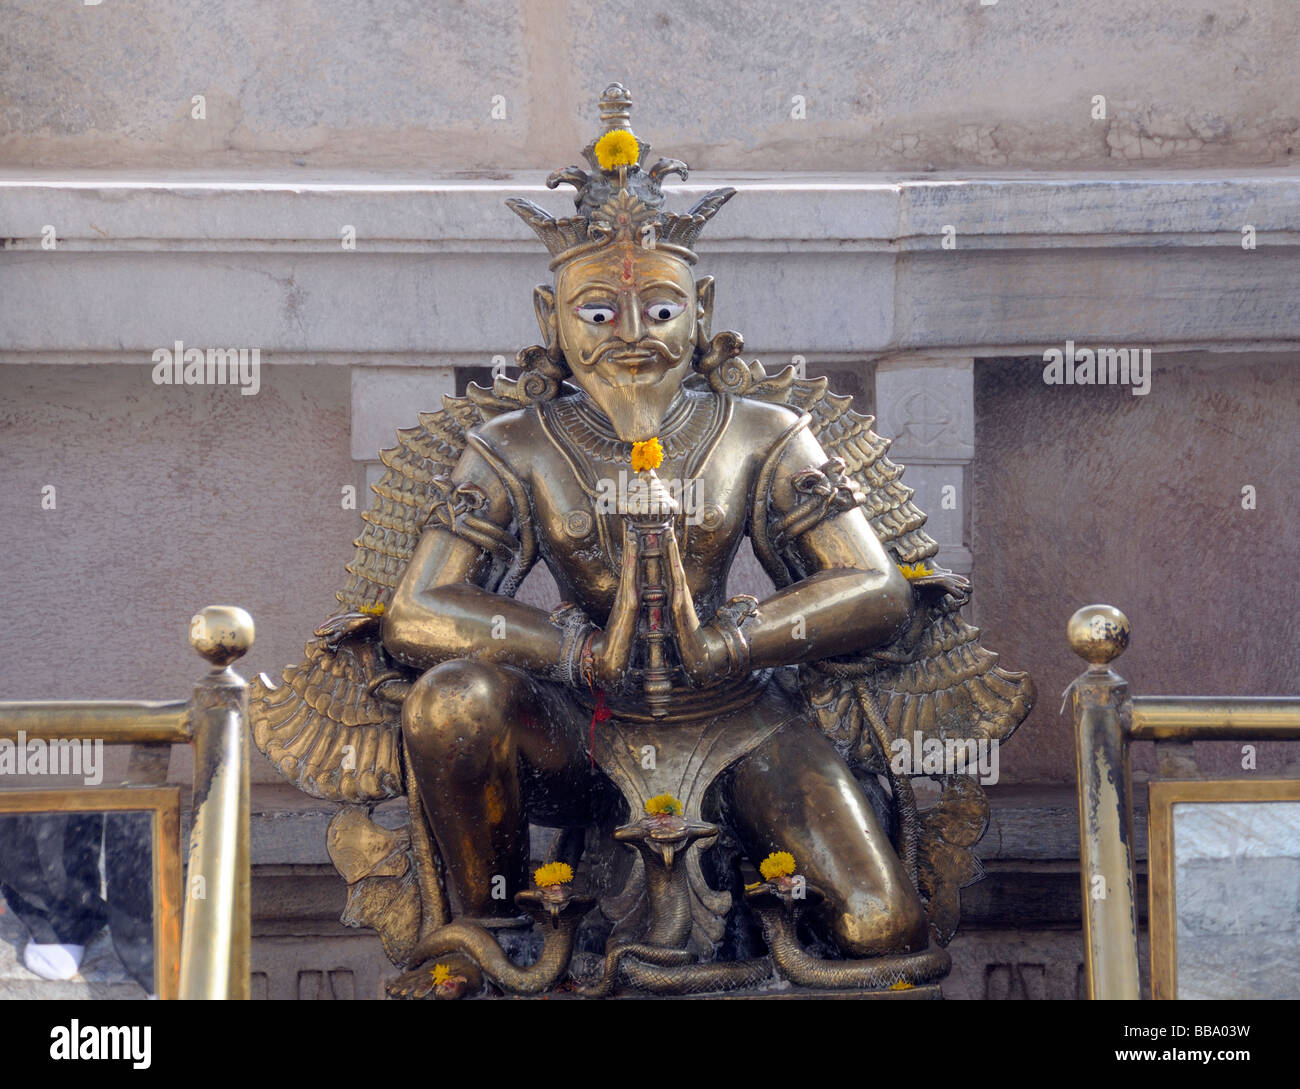 A person sized statue of the Hundu god Garuda. Stock Photo